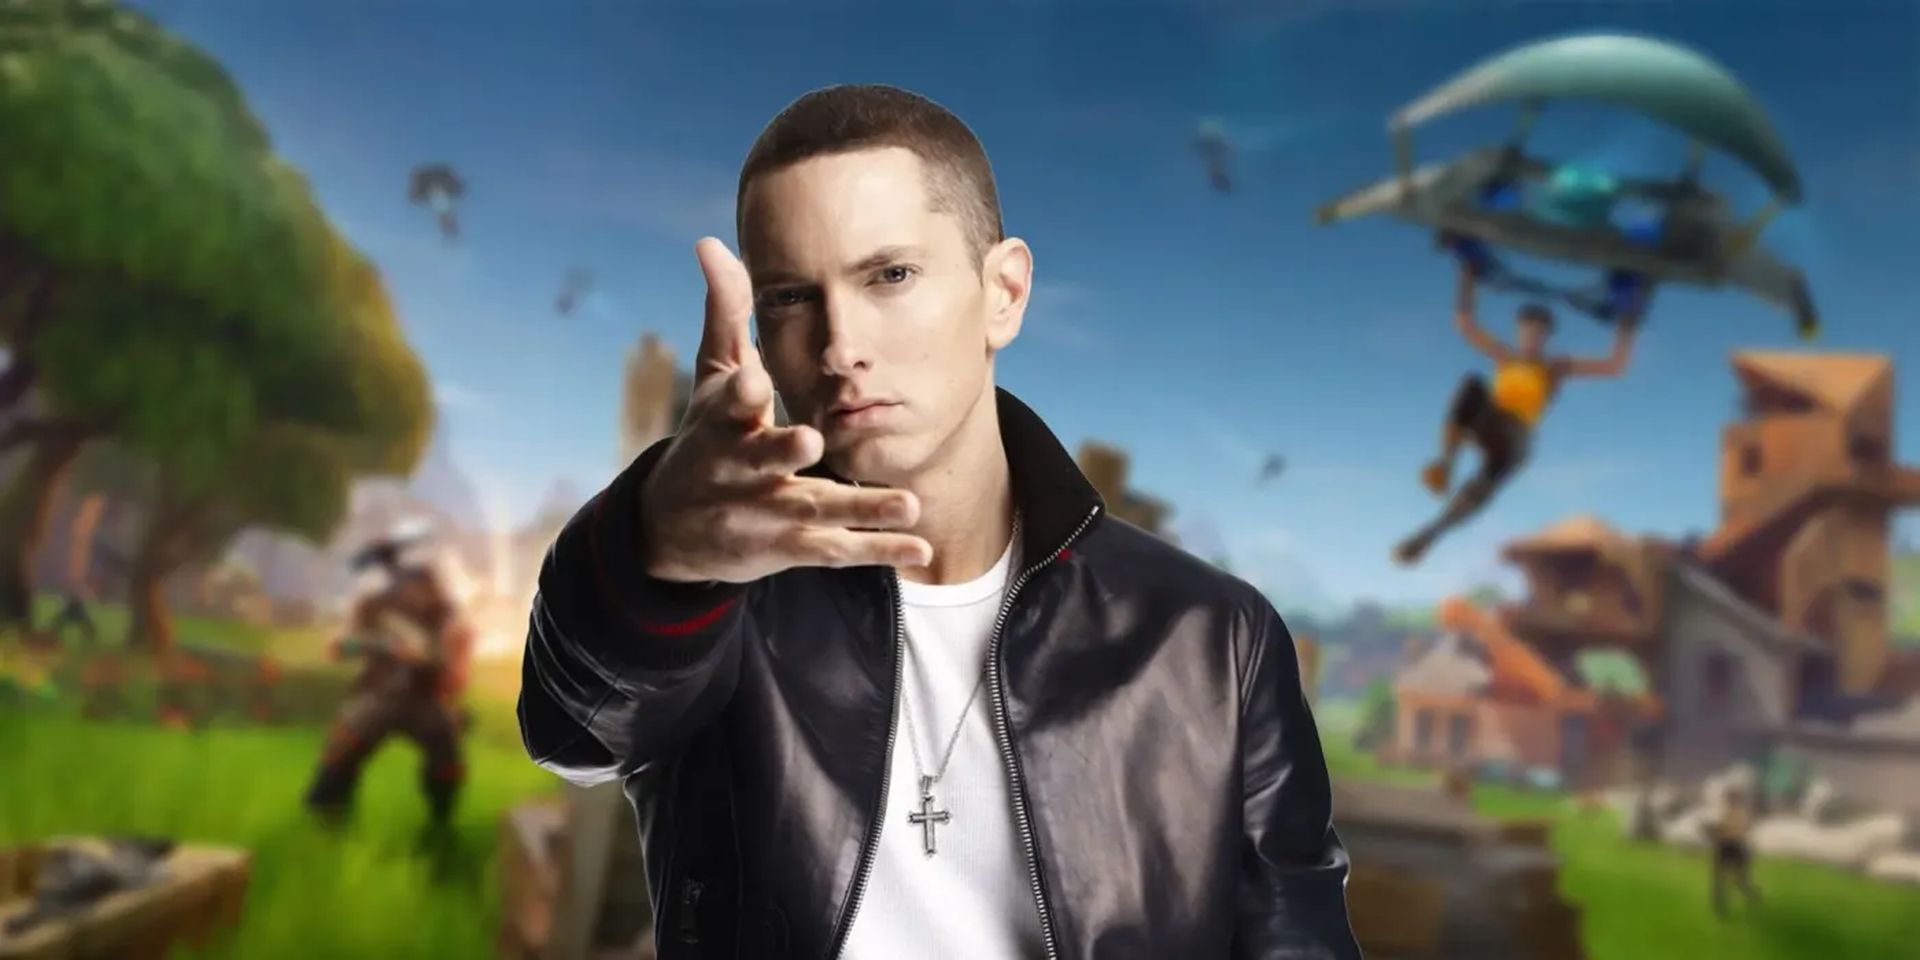 Возможная коллаборация с Eminem в Fortnite вызвала ажиотаж среди фанатов